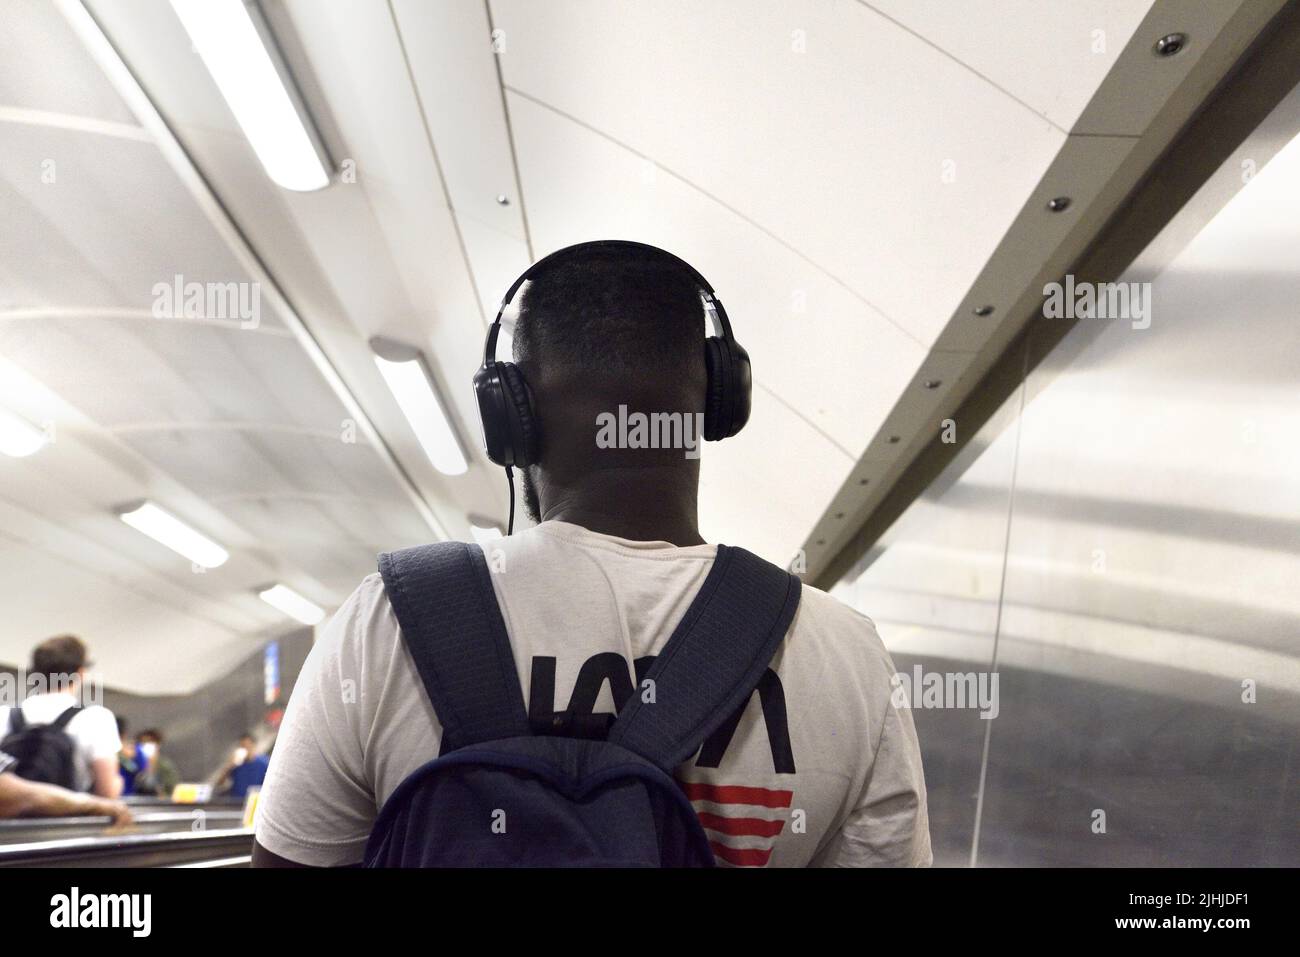 London, England, UK. London Underground - man wearing headphones on a down escalator Stock Photo